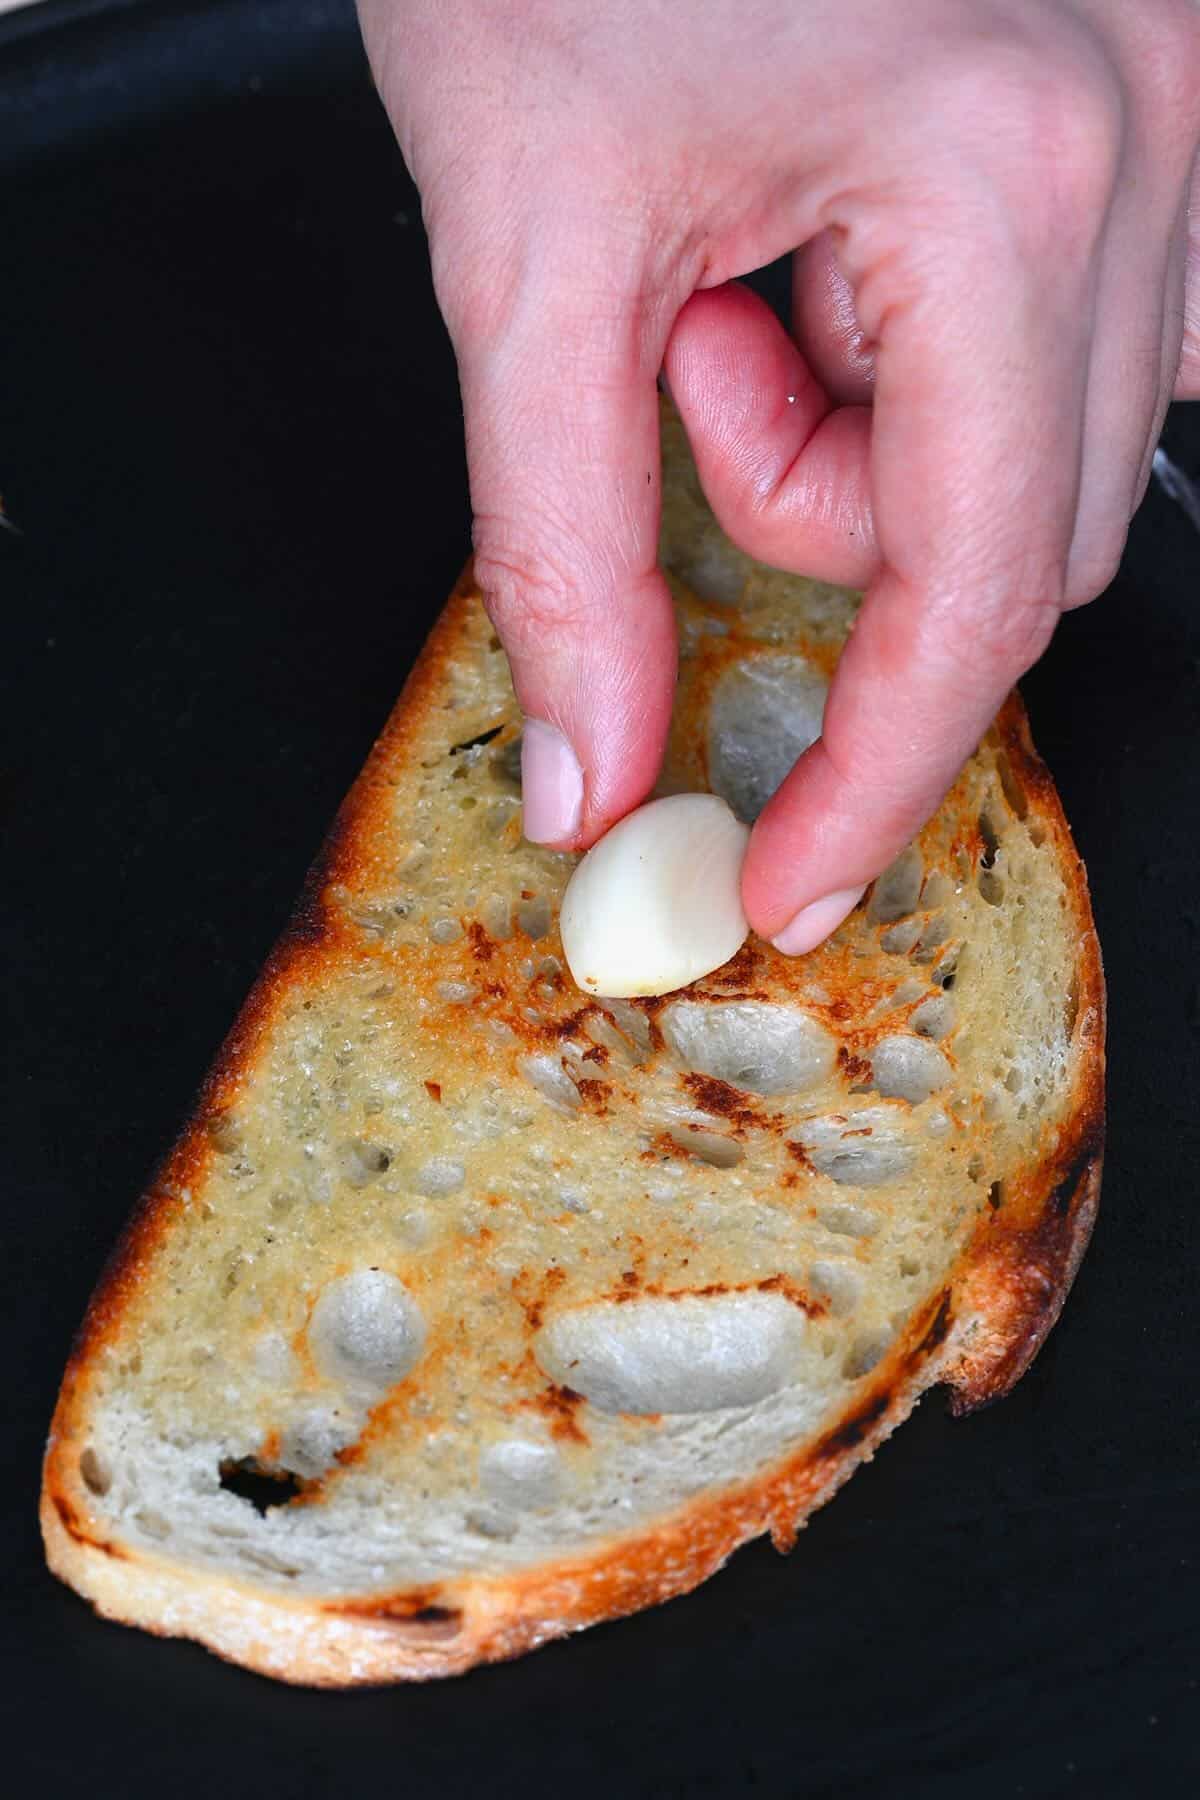 Rubbing a garlic clove on toasted bread